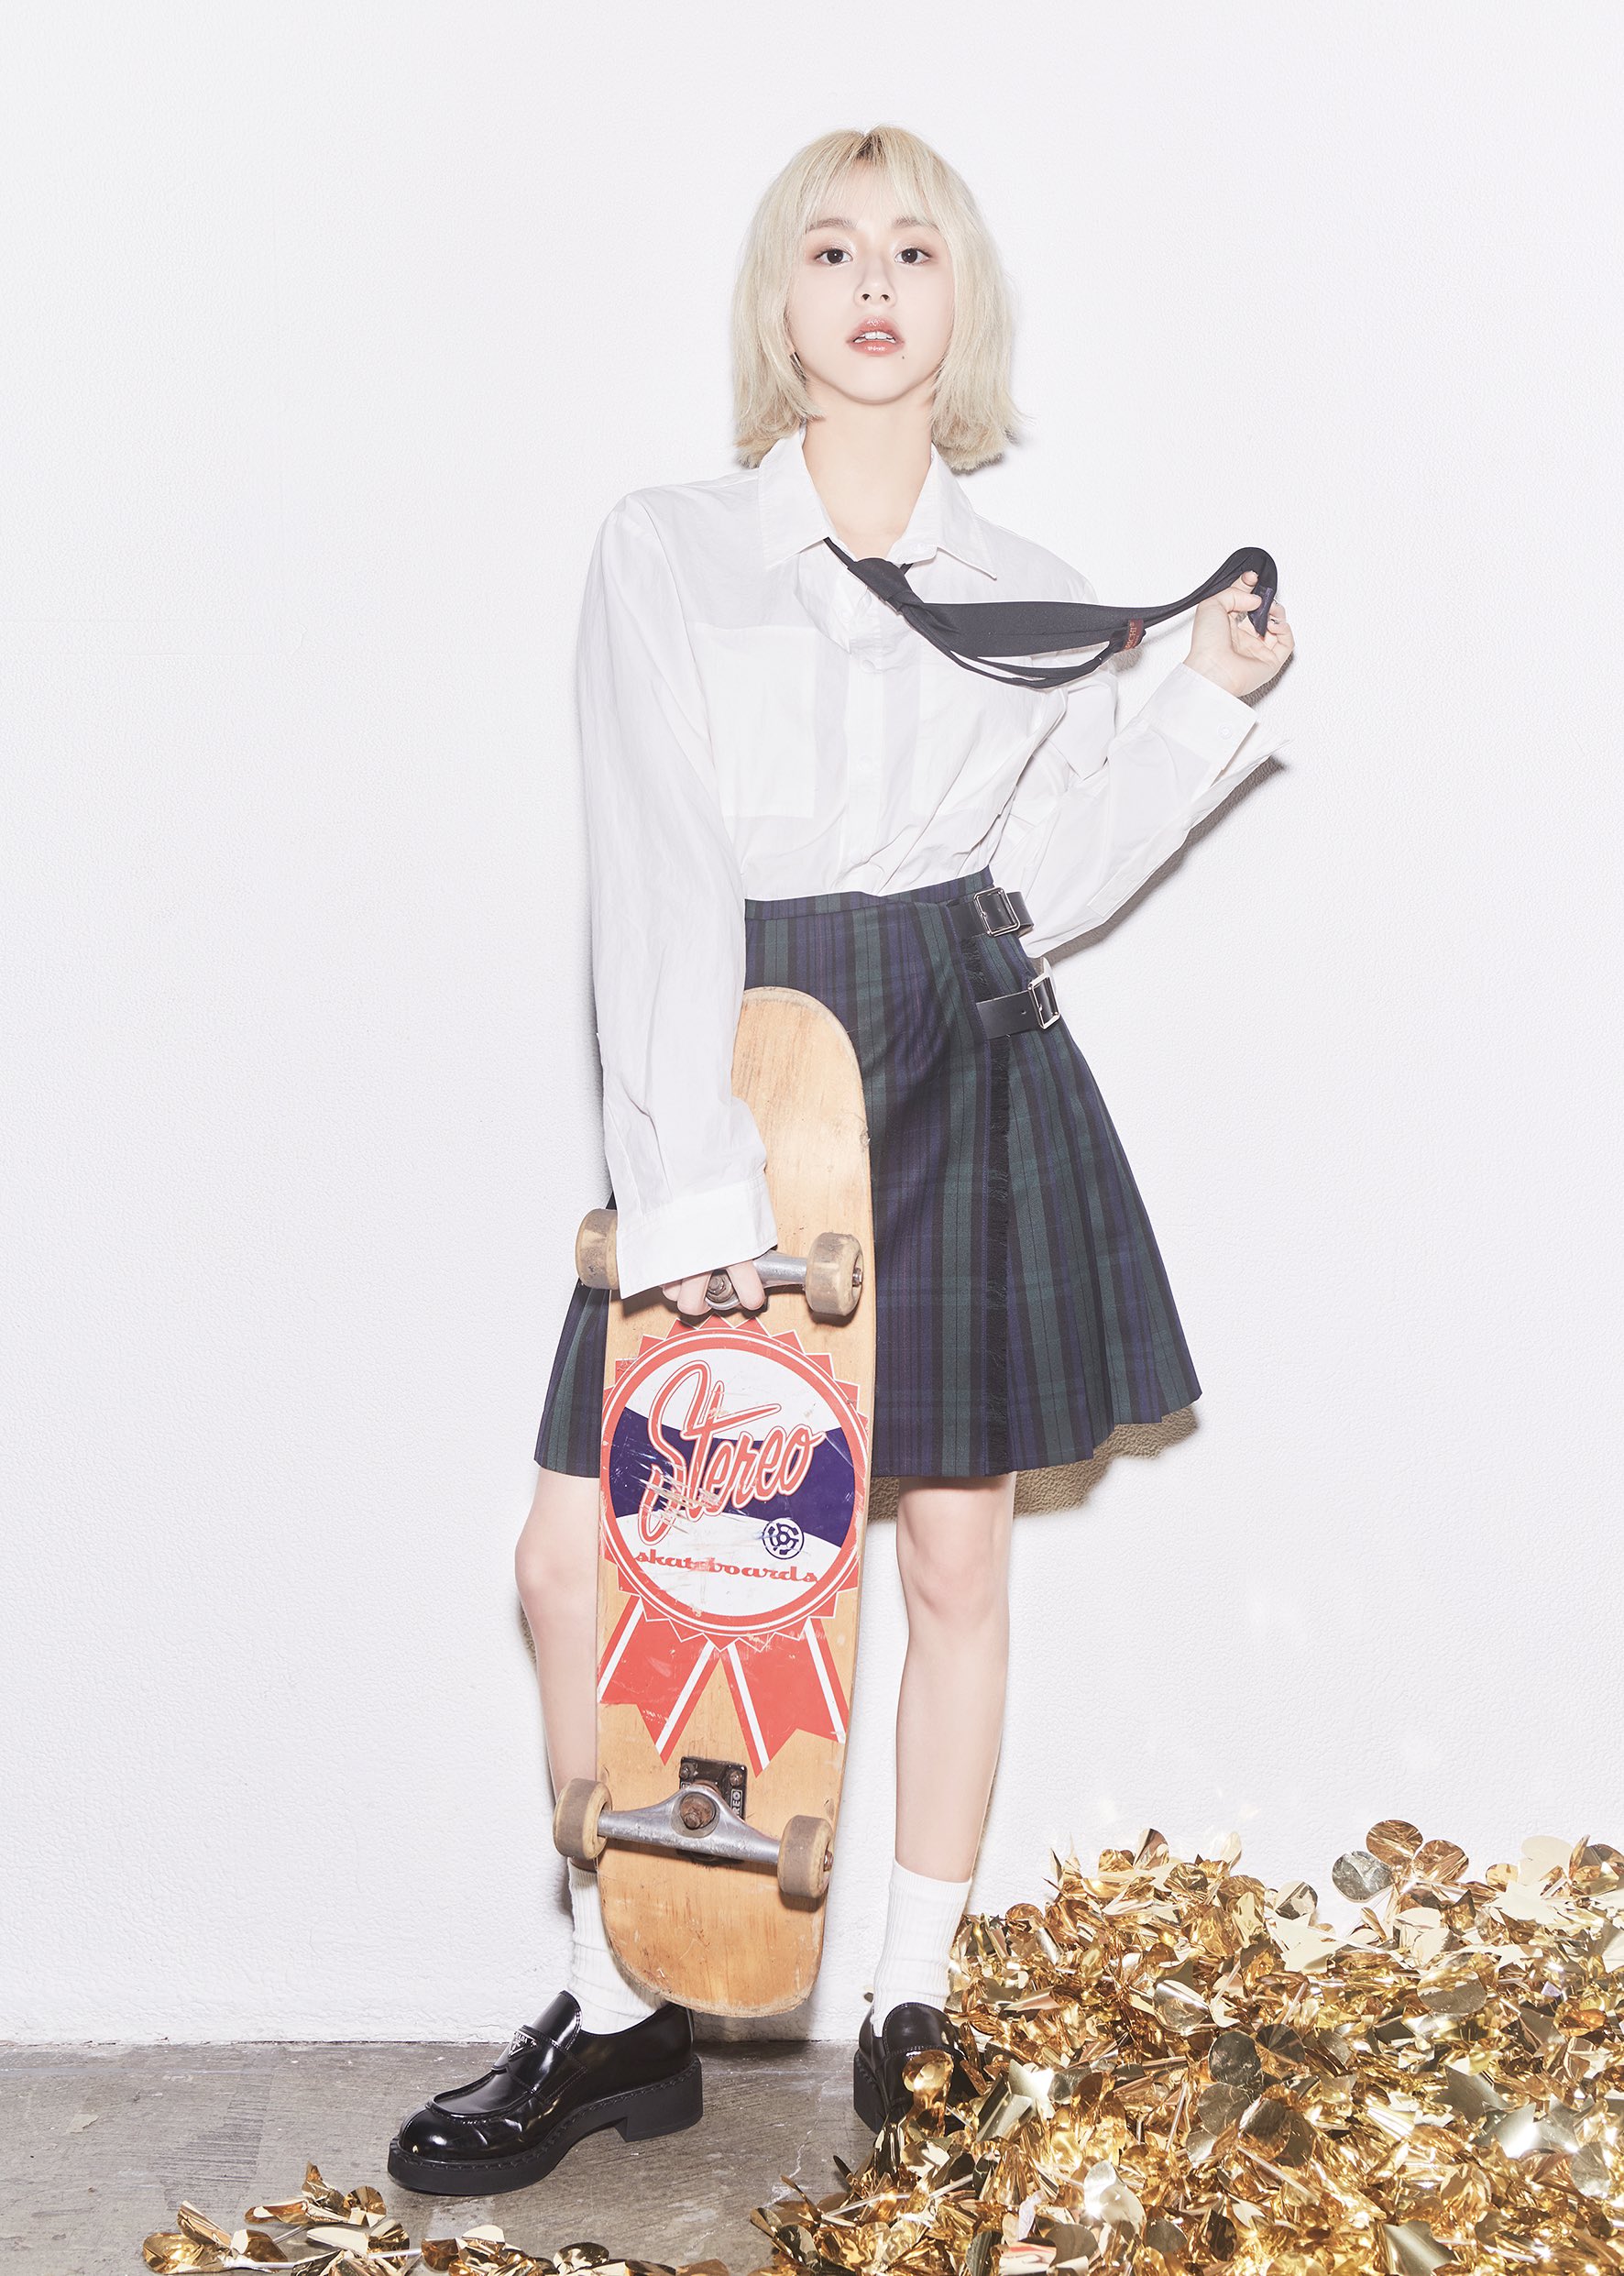 Twice Twice Chaeyoung K Pop Asian Blonde Skateboard Girl Band School Uniform 1772x2483